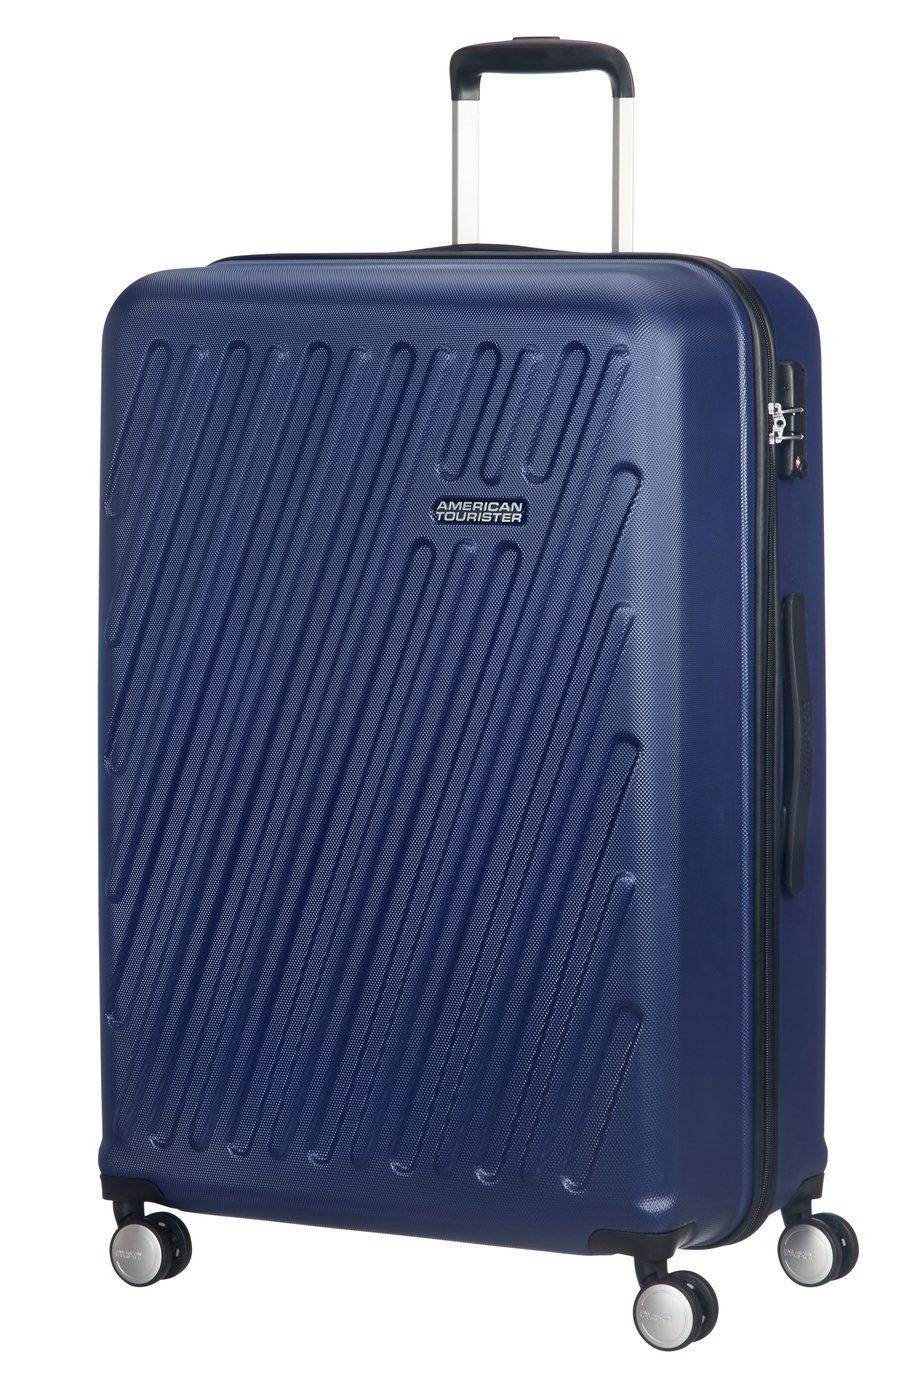 American Tourister Hypercube Hard Large Suitcase - Navy